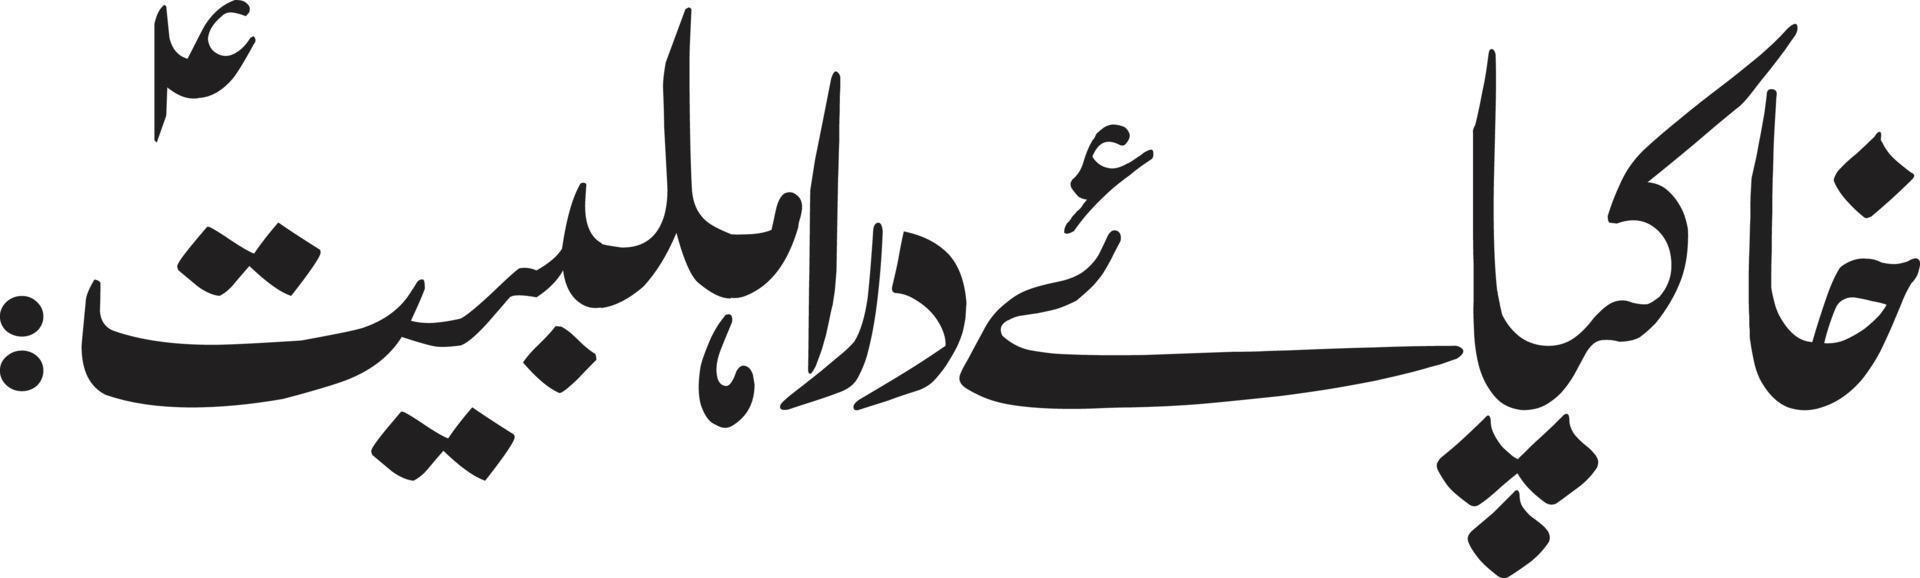 khakpaey dar ahlbeat Islamitisch Arabisch schoonschrift vrij vector